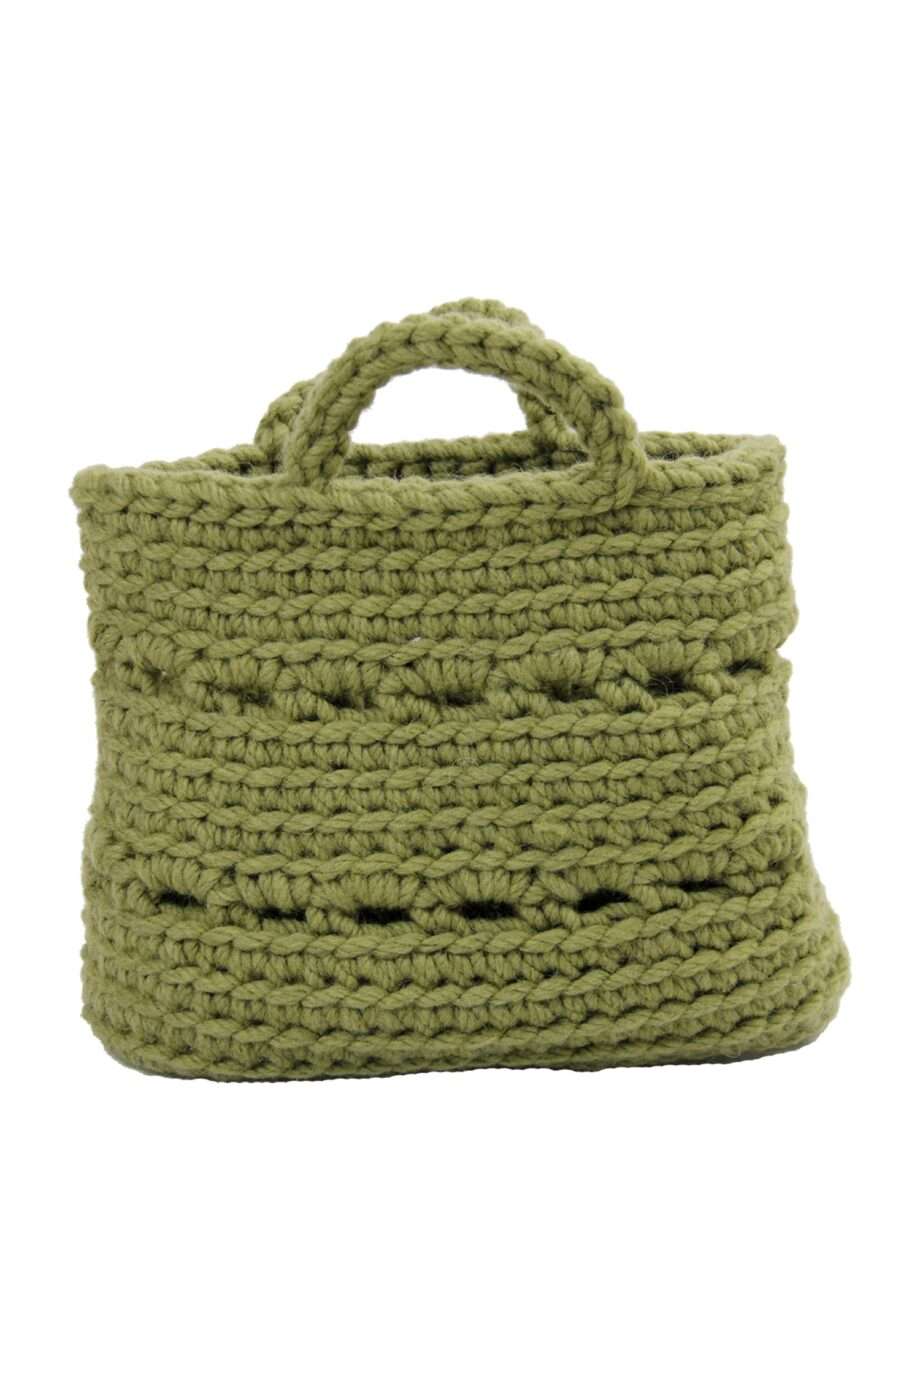 basic olive green crochet woolen basket medium